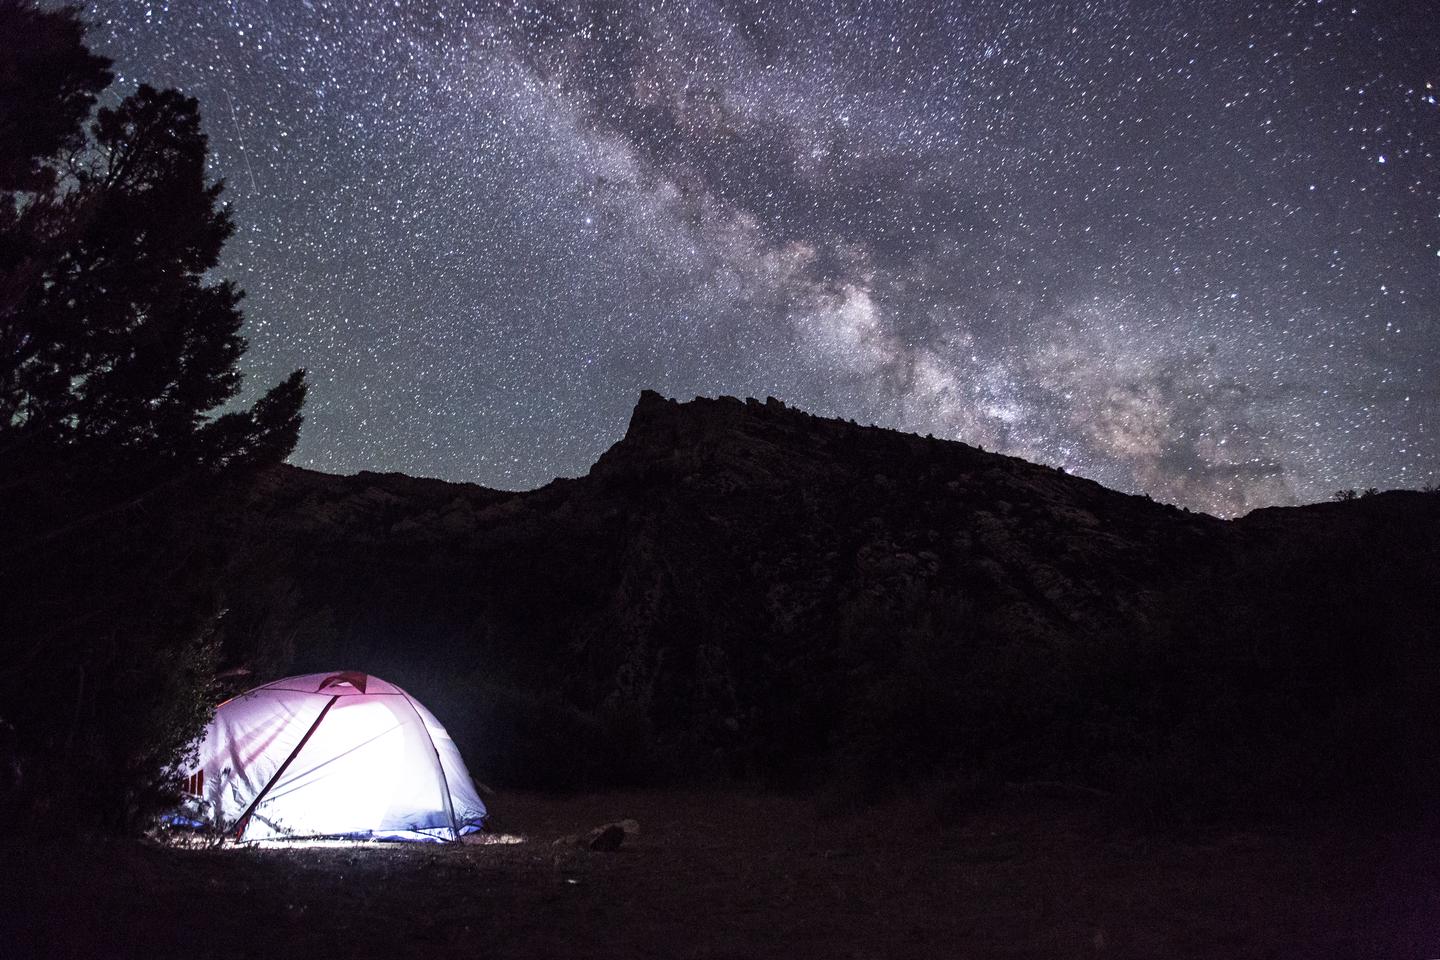 Night Sky over TentDinosaur's dark skies provides dramatic views of the Milky Way Galaxy